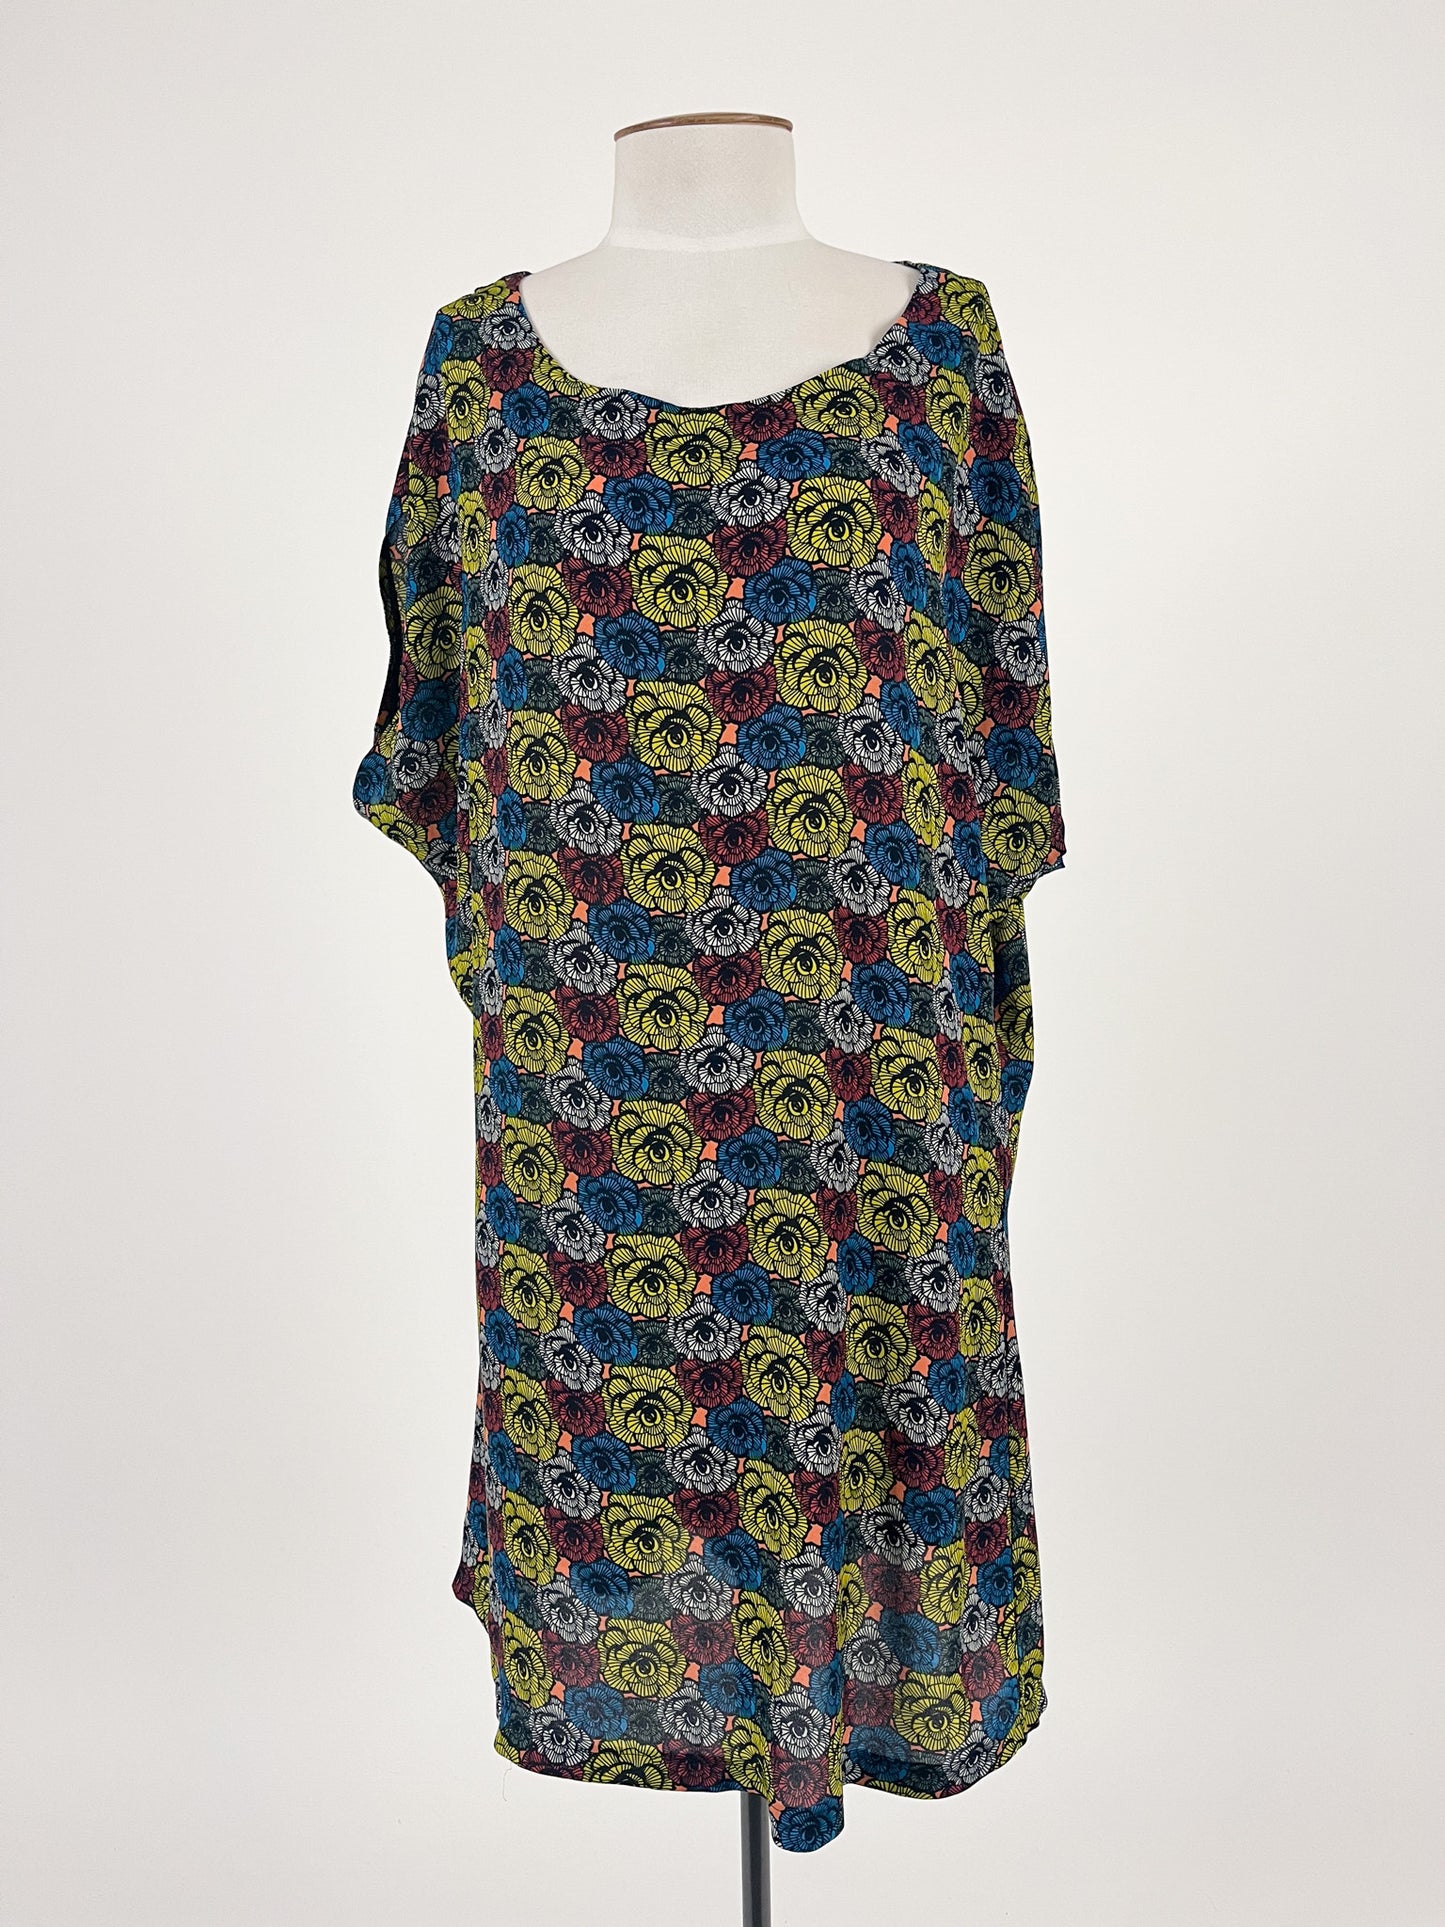 Surge | Multicoloured Casual/Workwear Dress | Size M